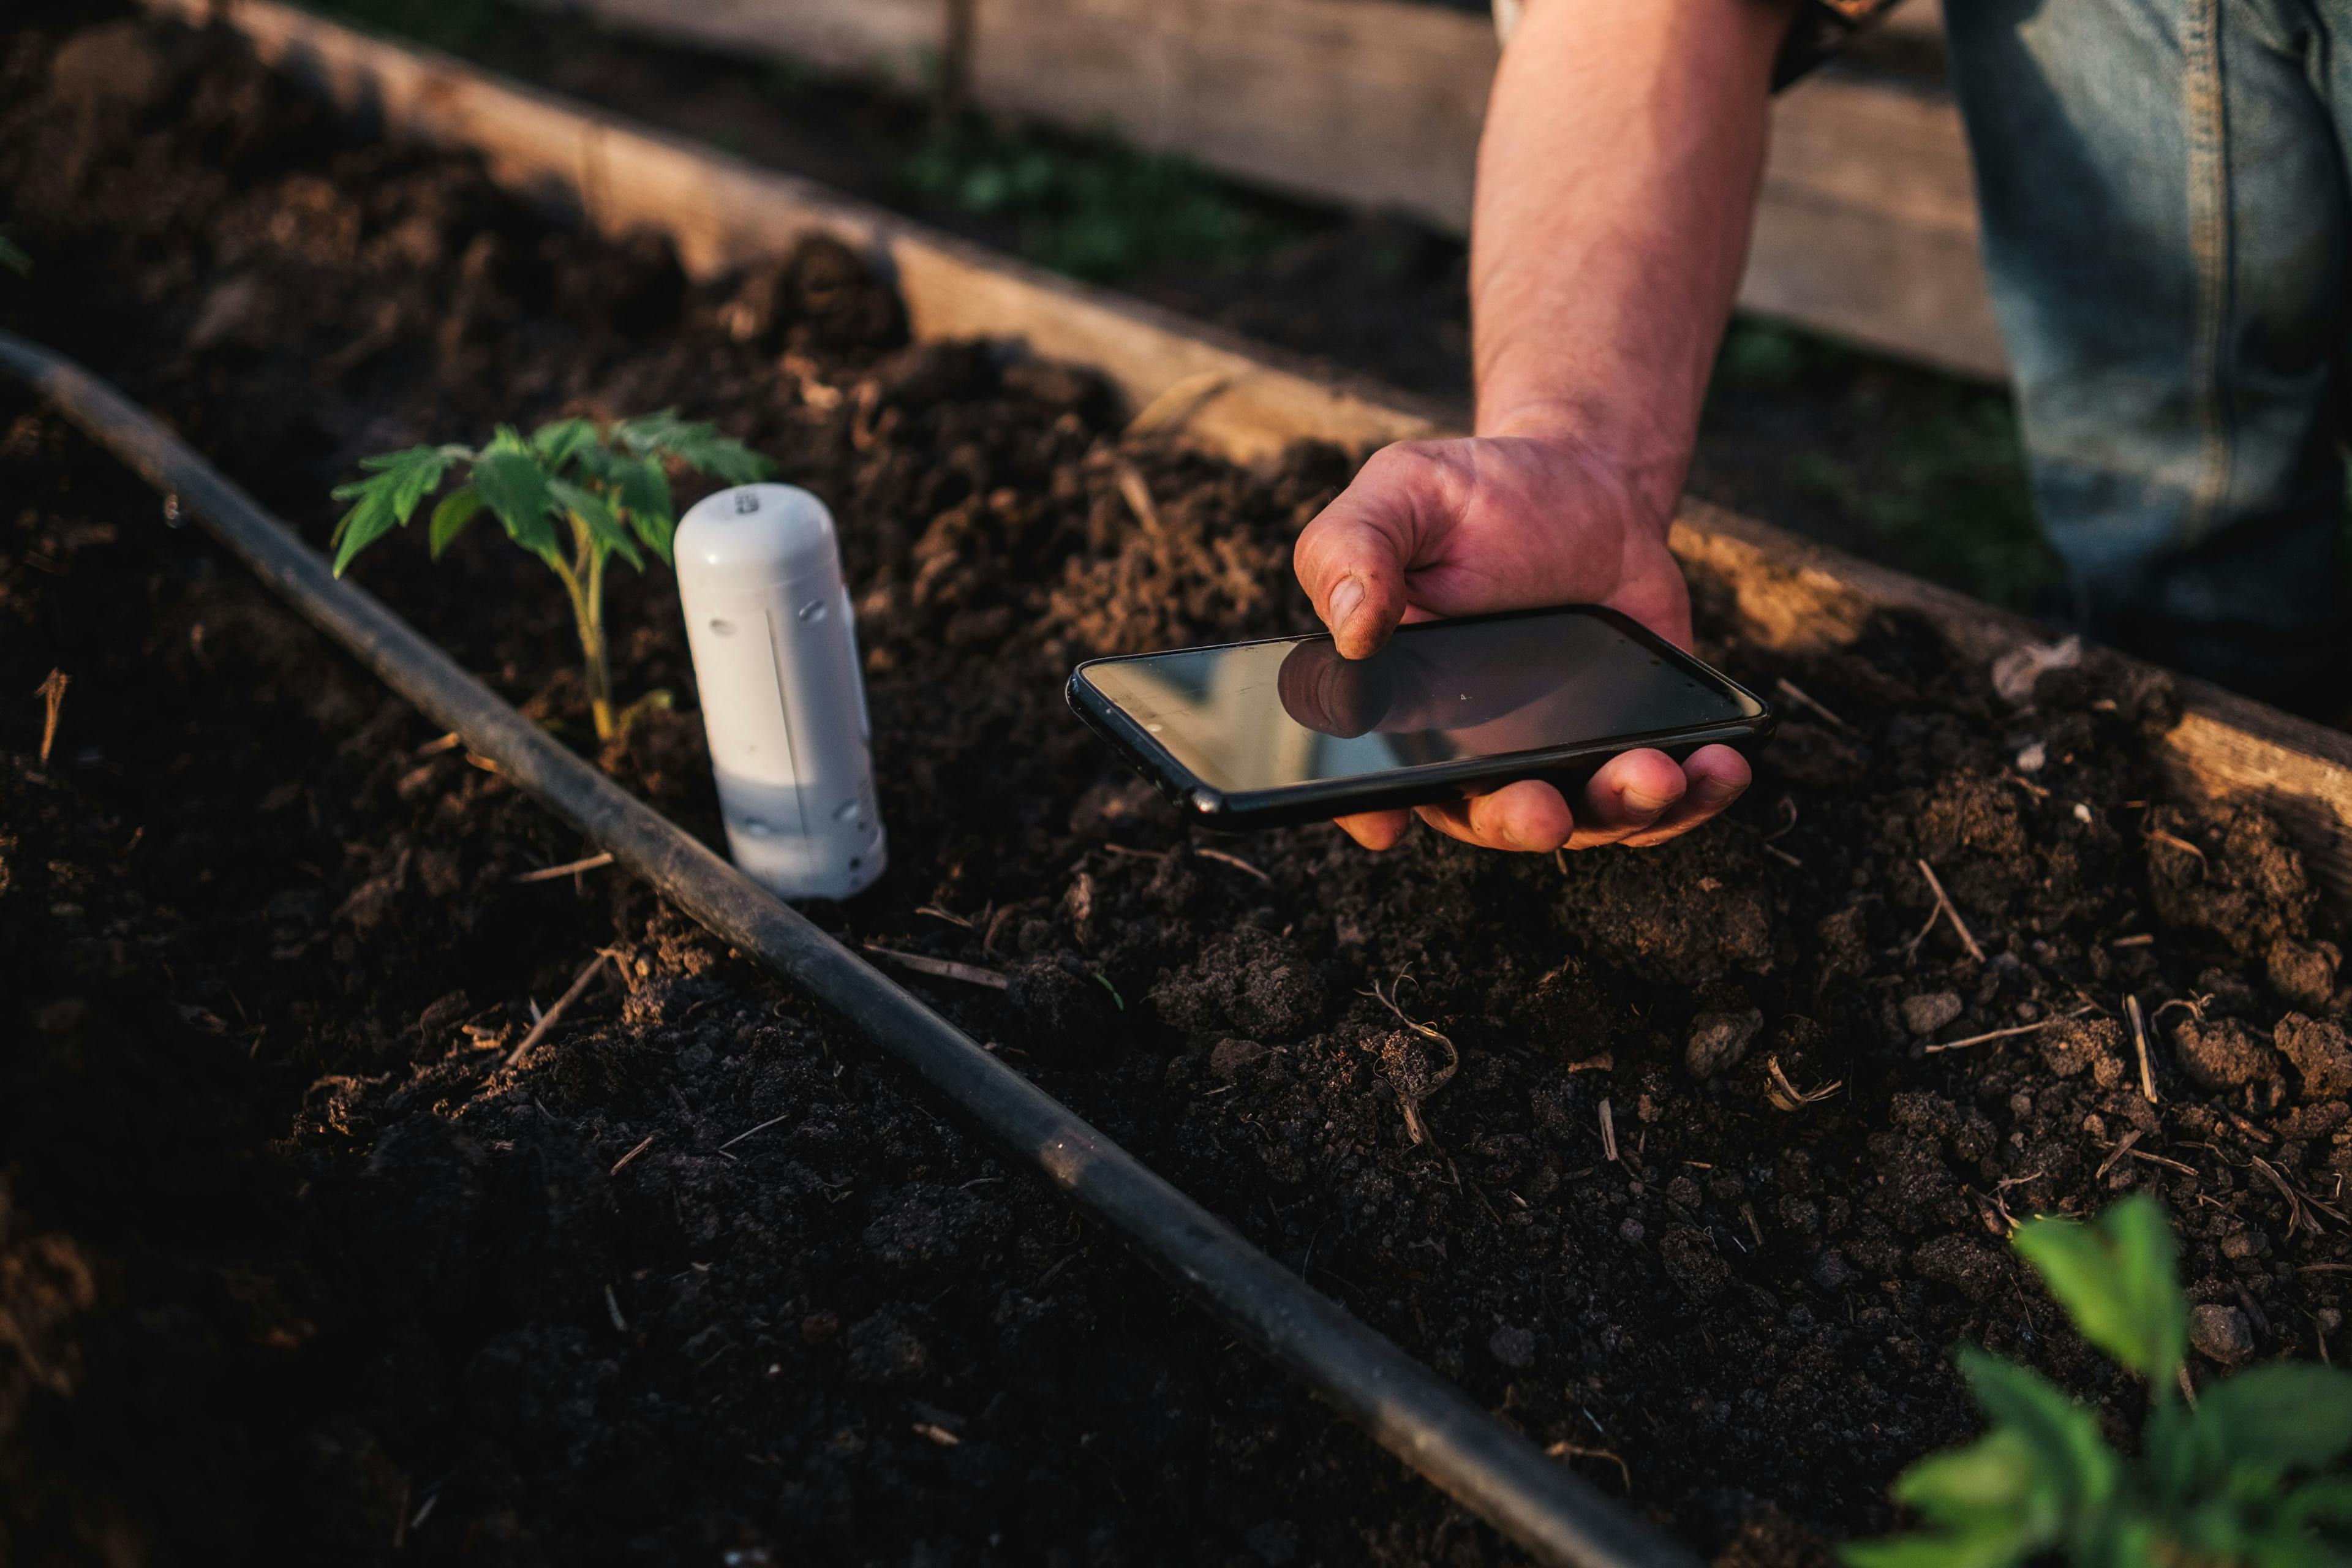 Gardener using mobile app checking monitoring soil moisture with smartphone | Image Credit: © memento_jpeg - stock.adobe.com